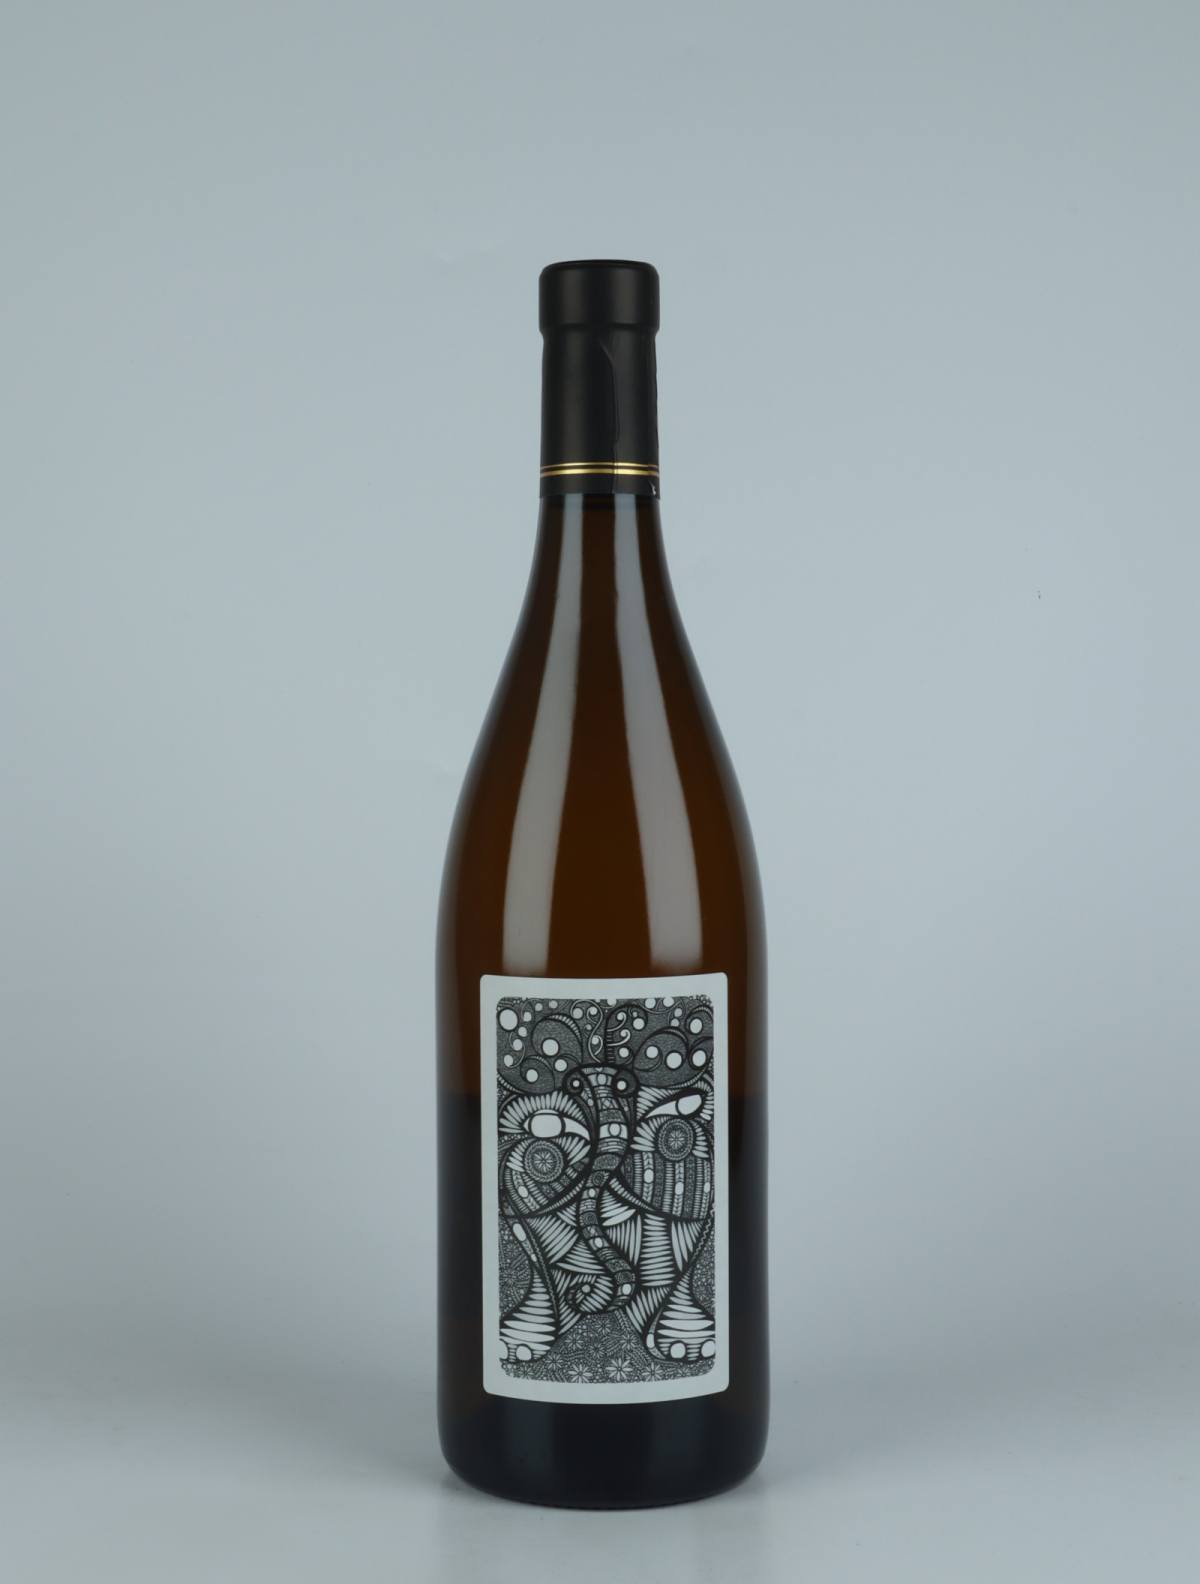 A bottle 2018 Esquiss White wine from Julien Courtois, Loire in France